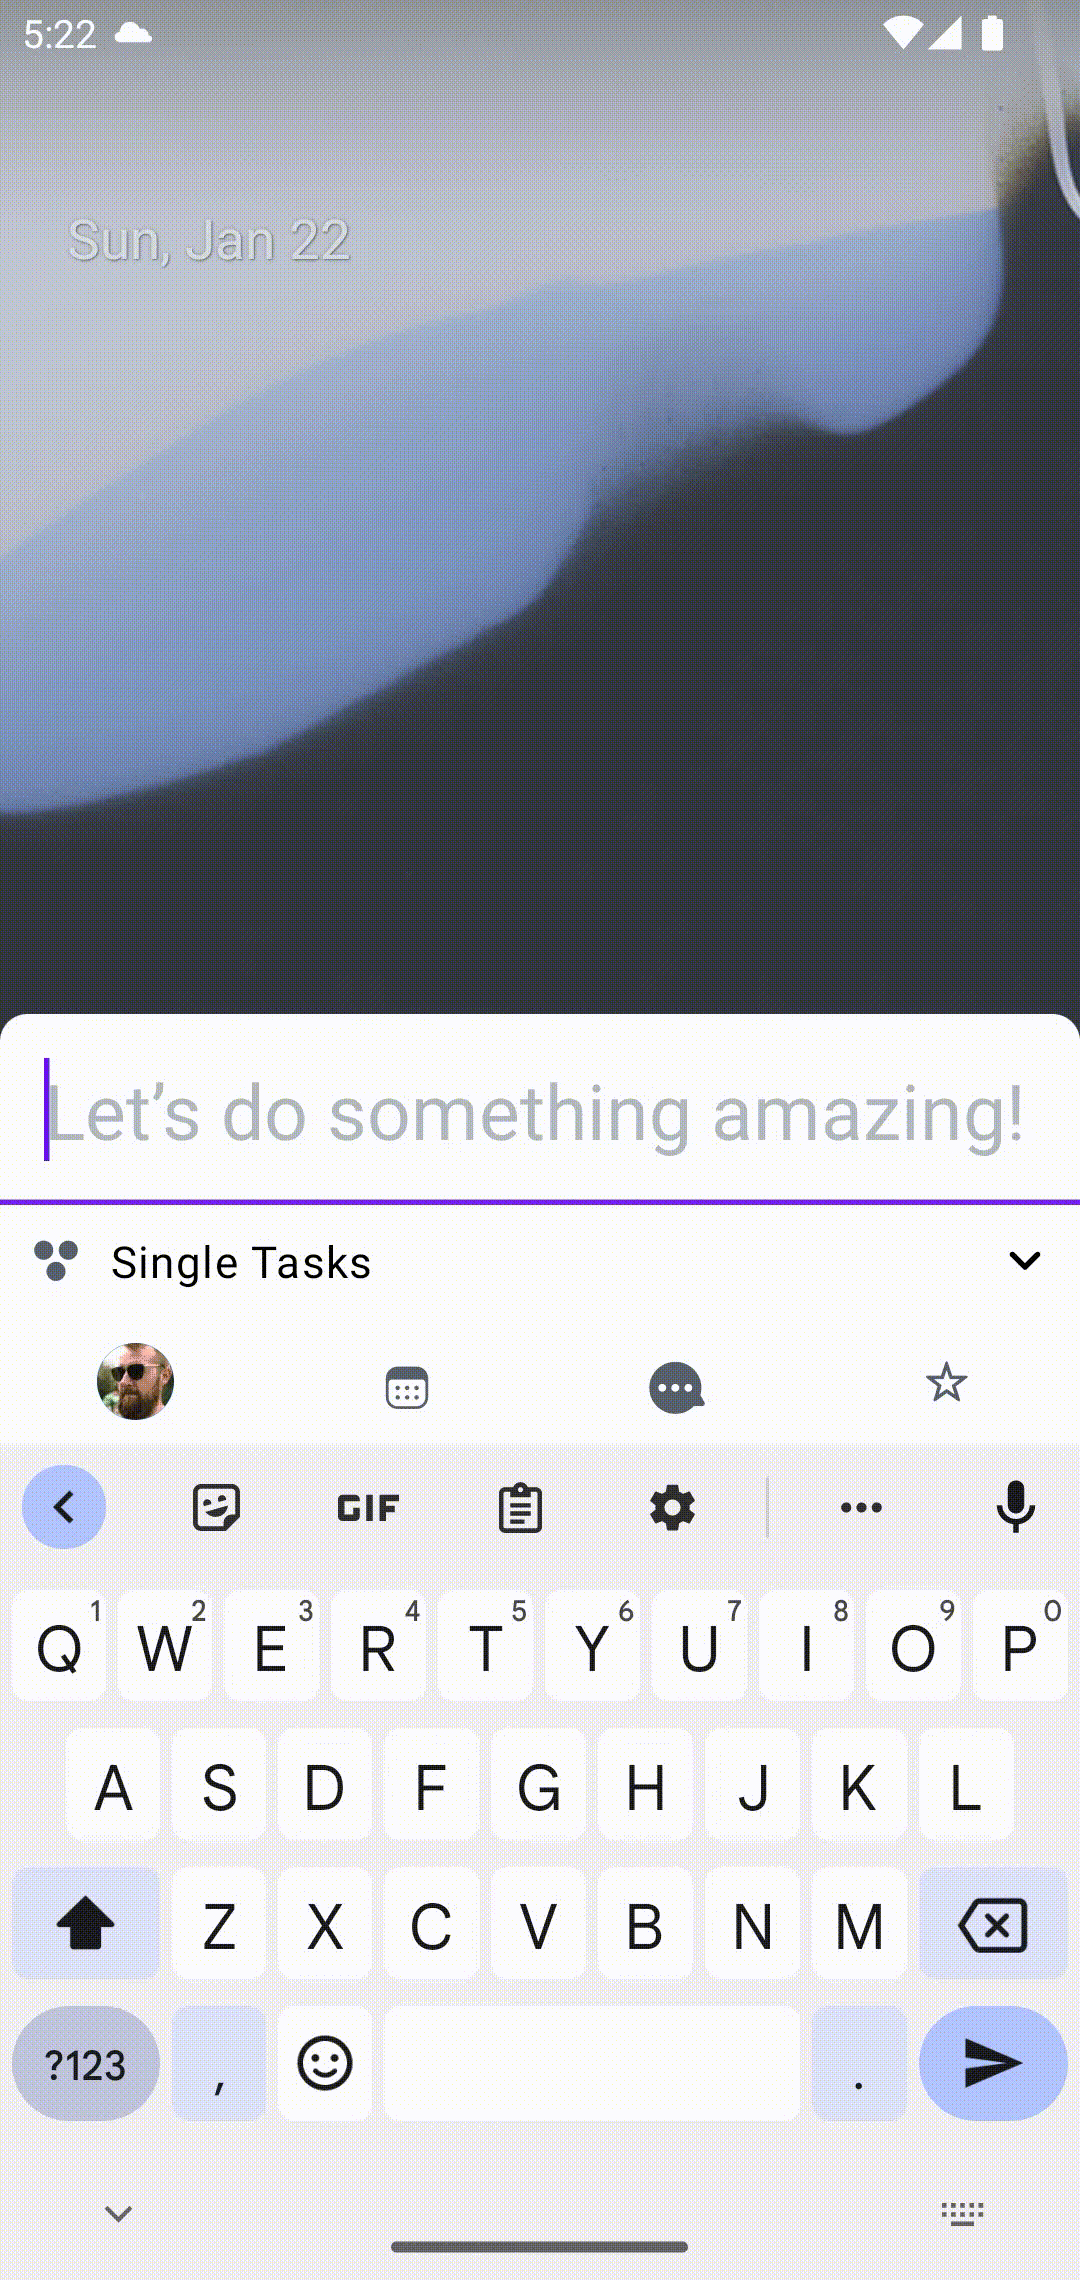 Adding tasks via Quick add